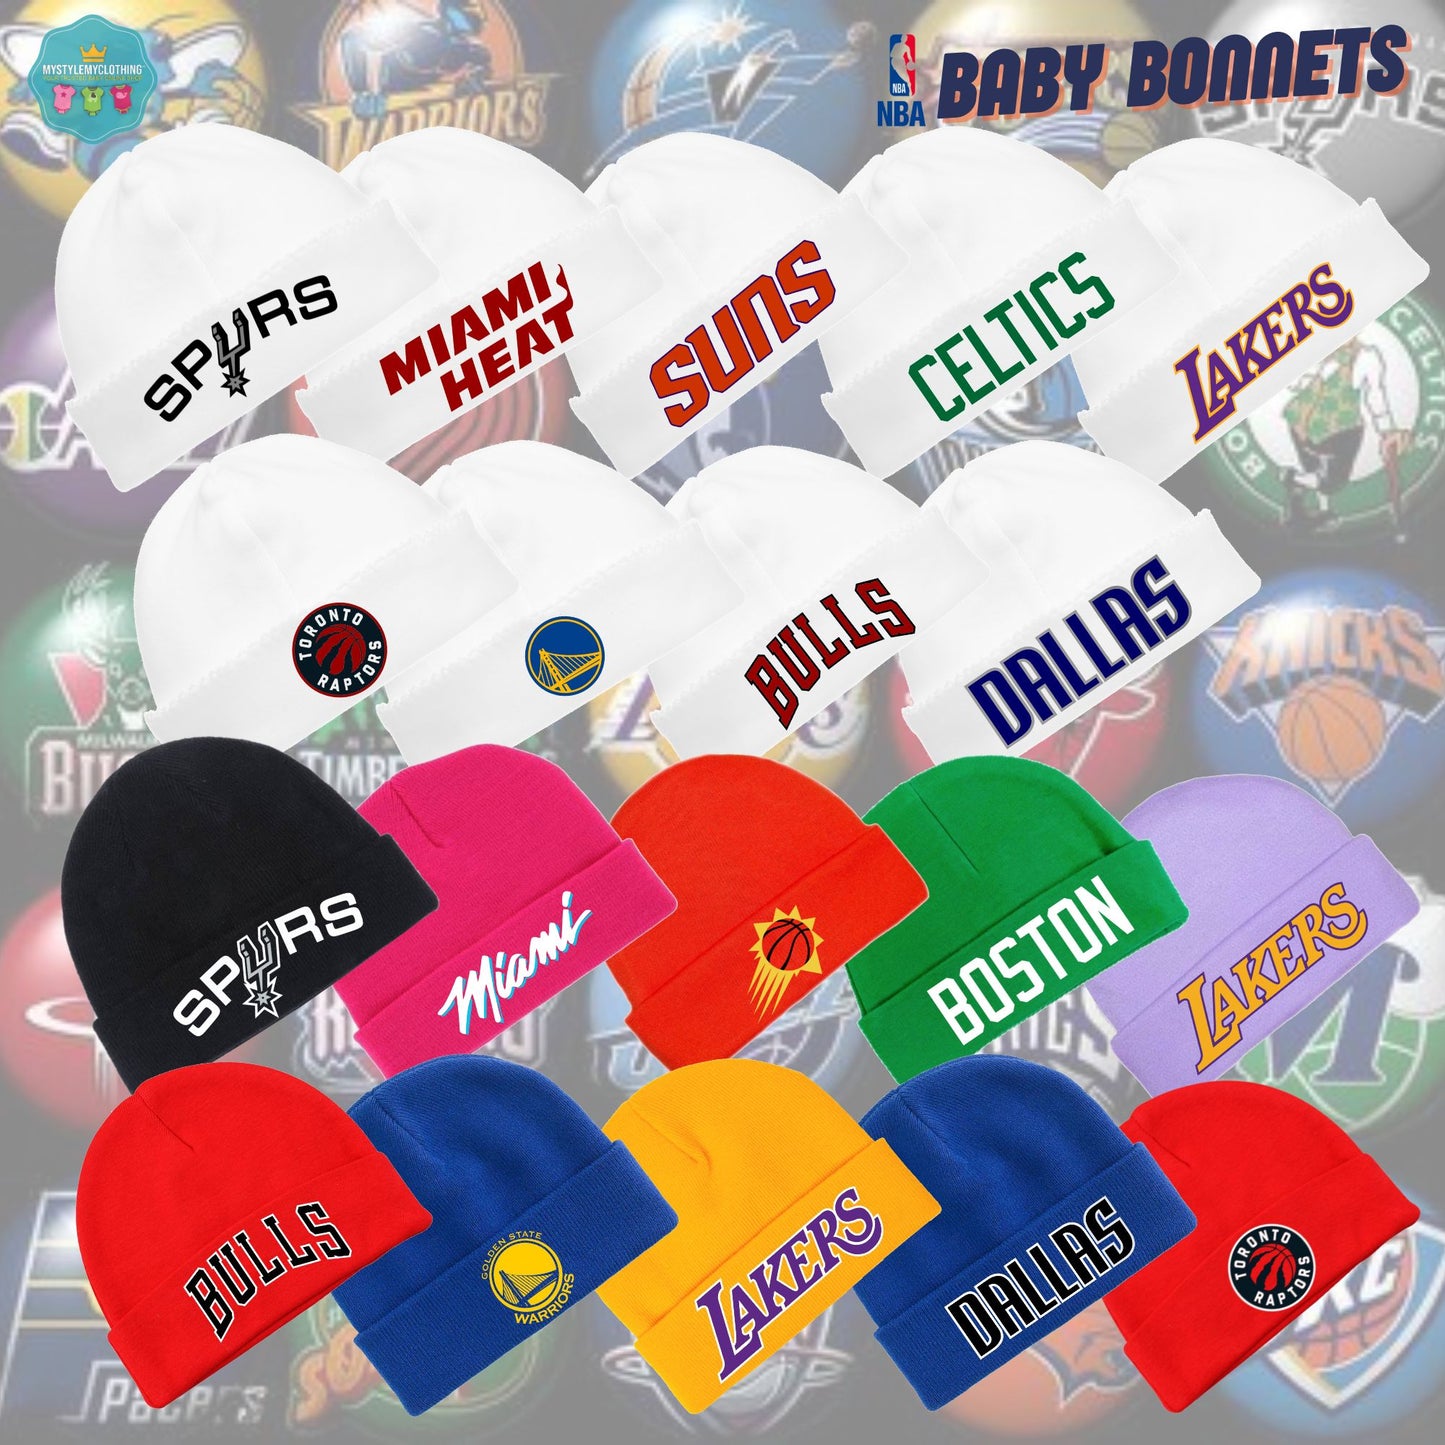 Baby Basketball Bonnets - Bulls